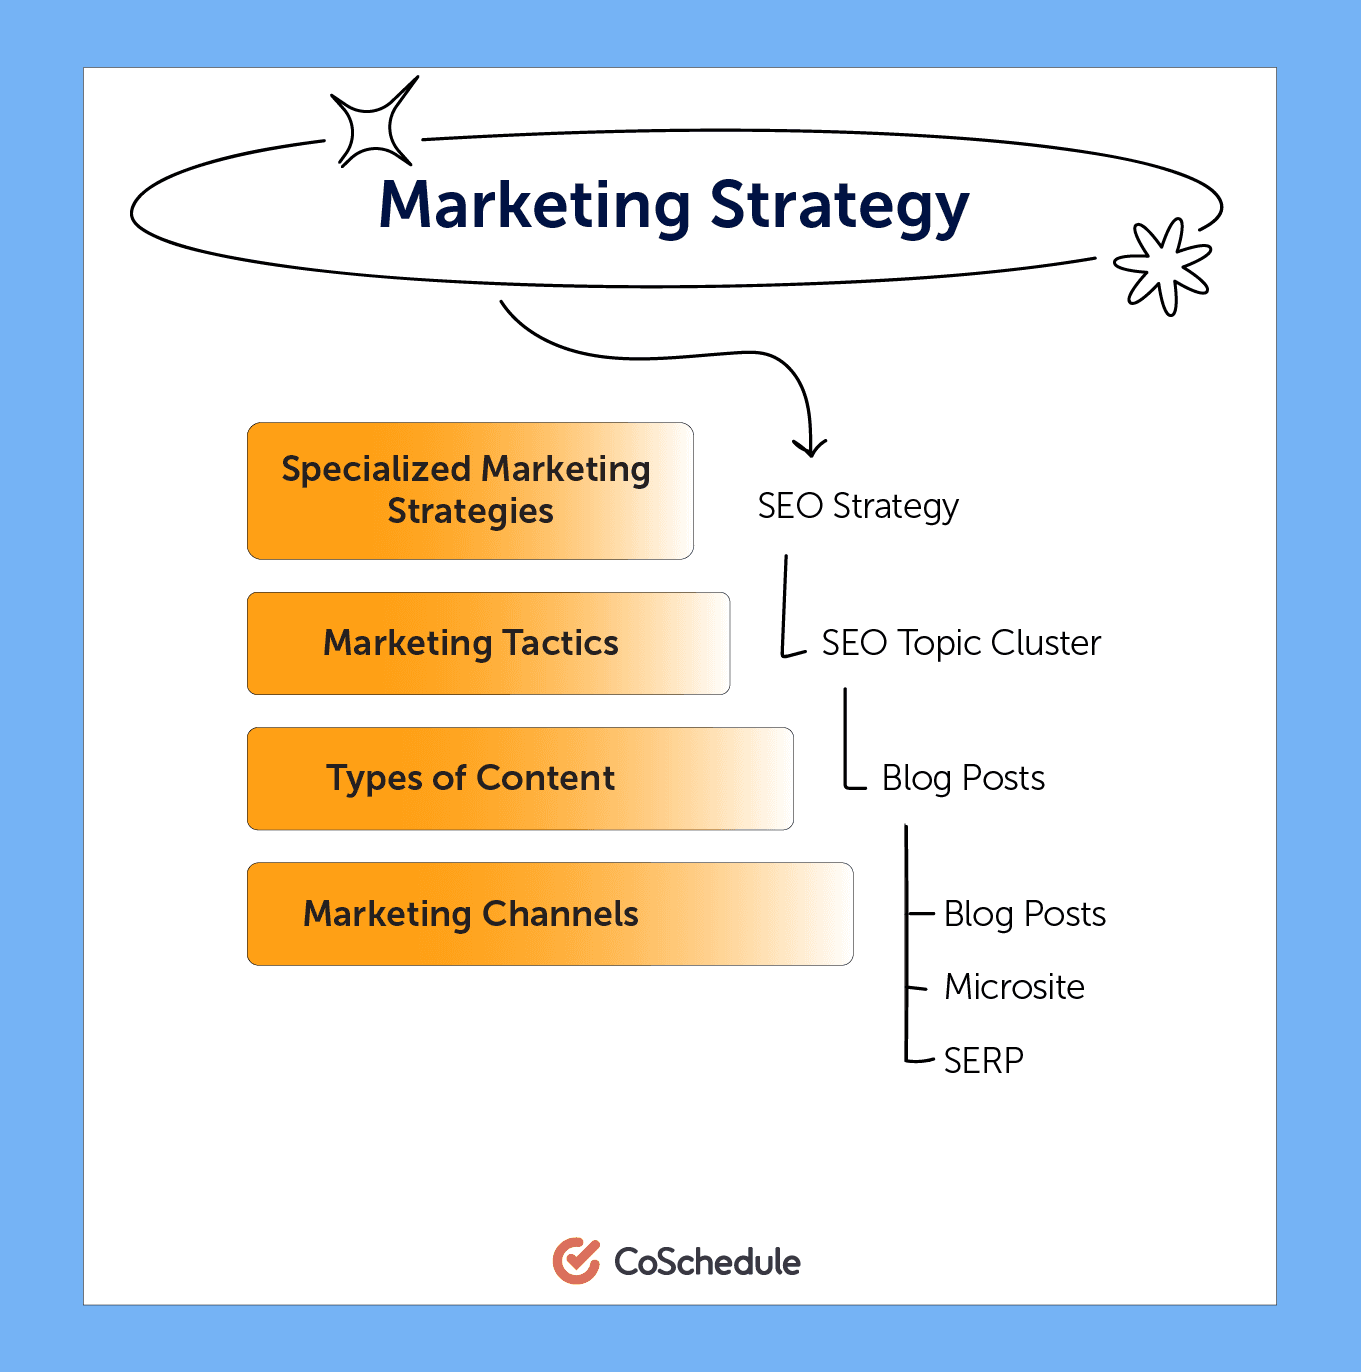 Marketing Strategy by category